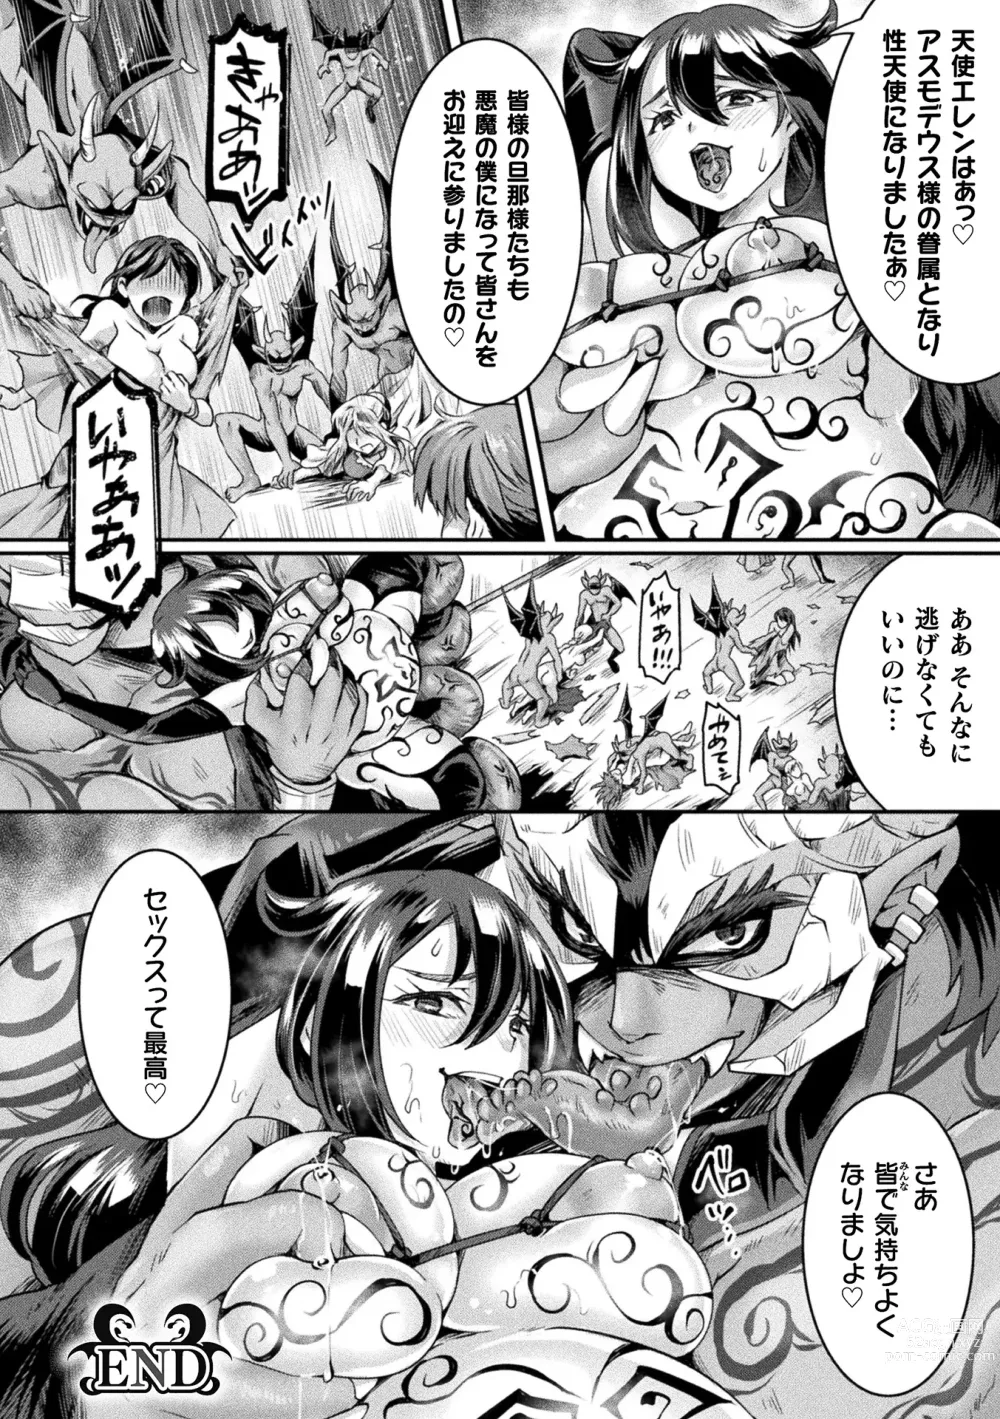 Page 34 of manga Seigi Dain Unmoral